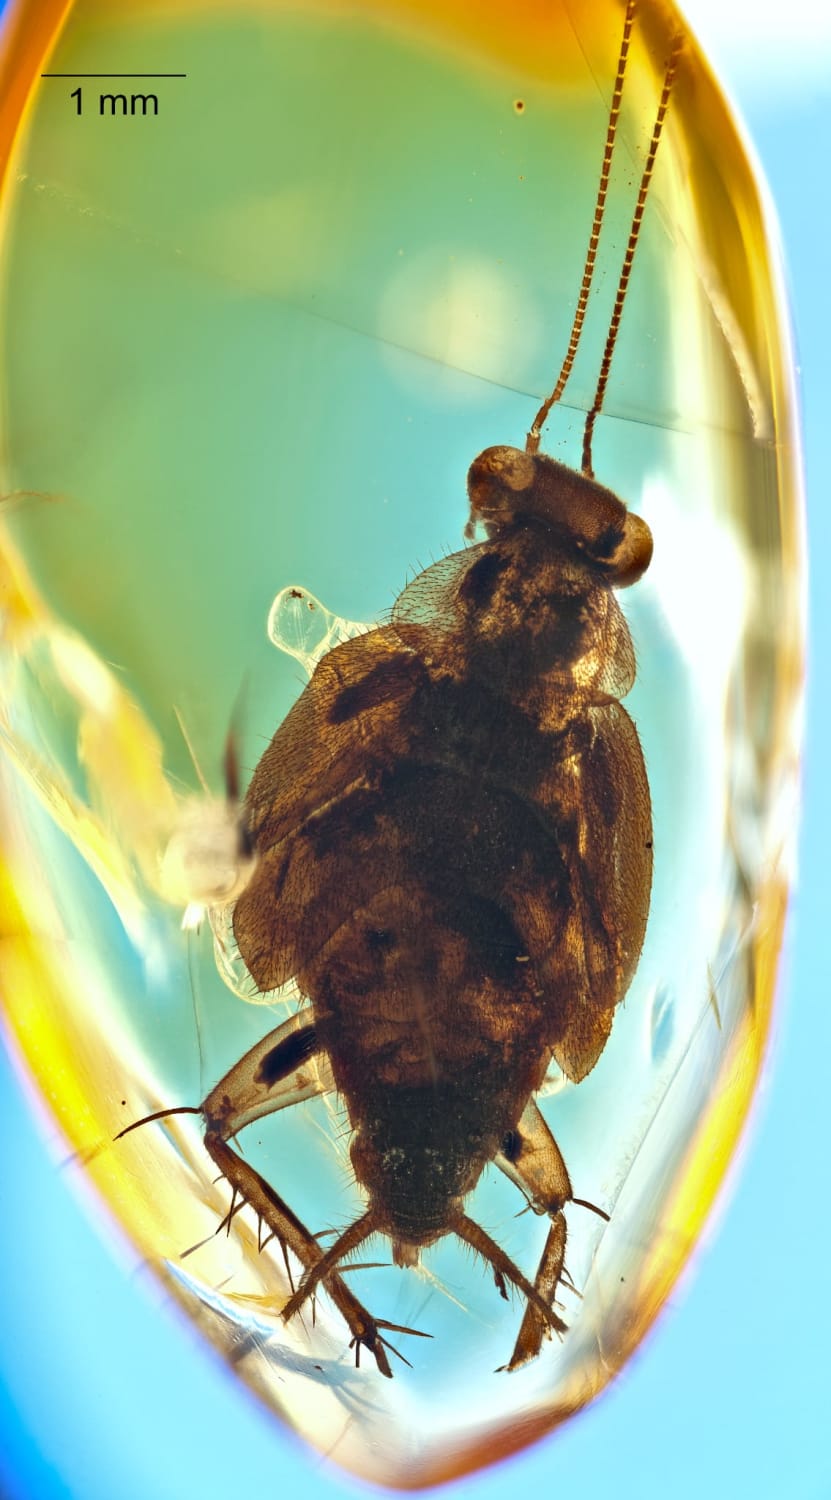 A Sub-Adult roach in Burmese amber.